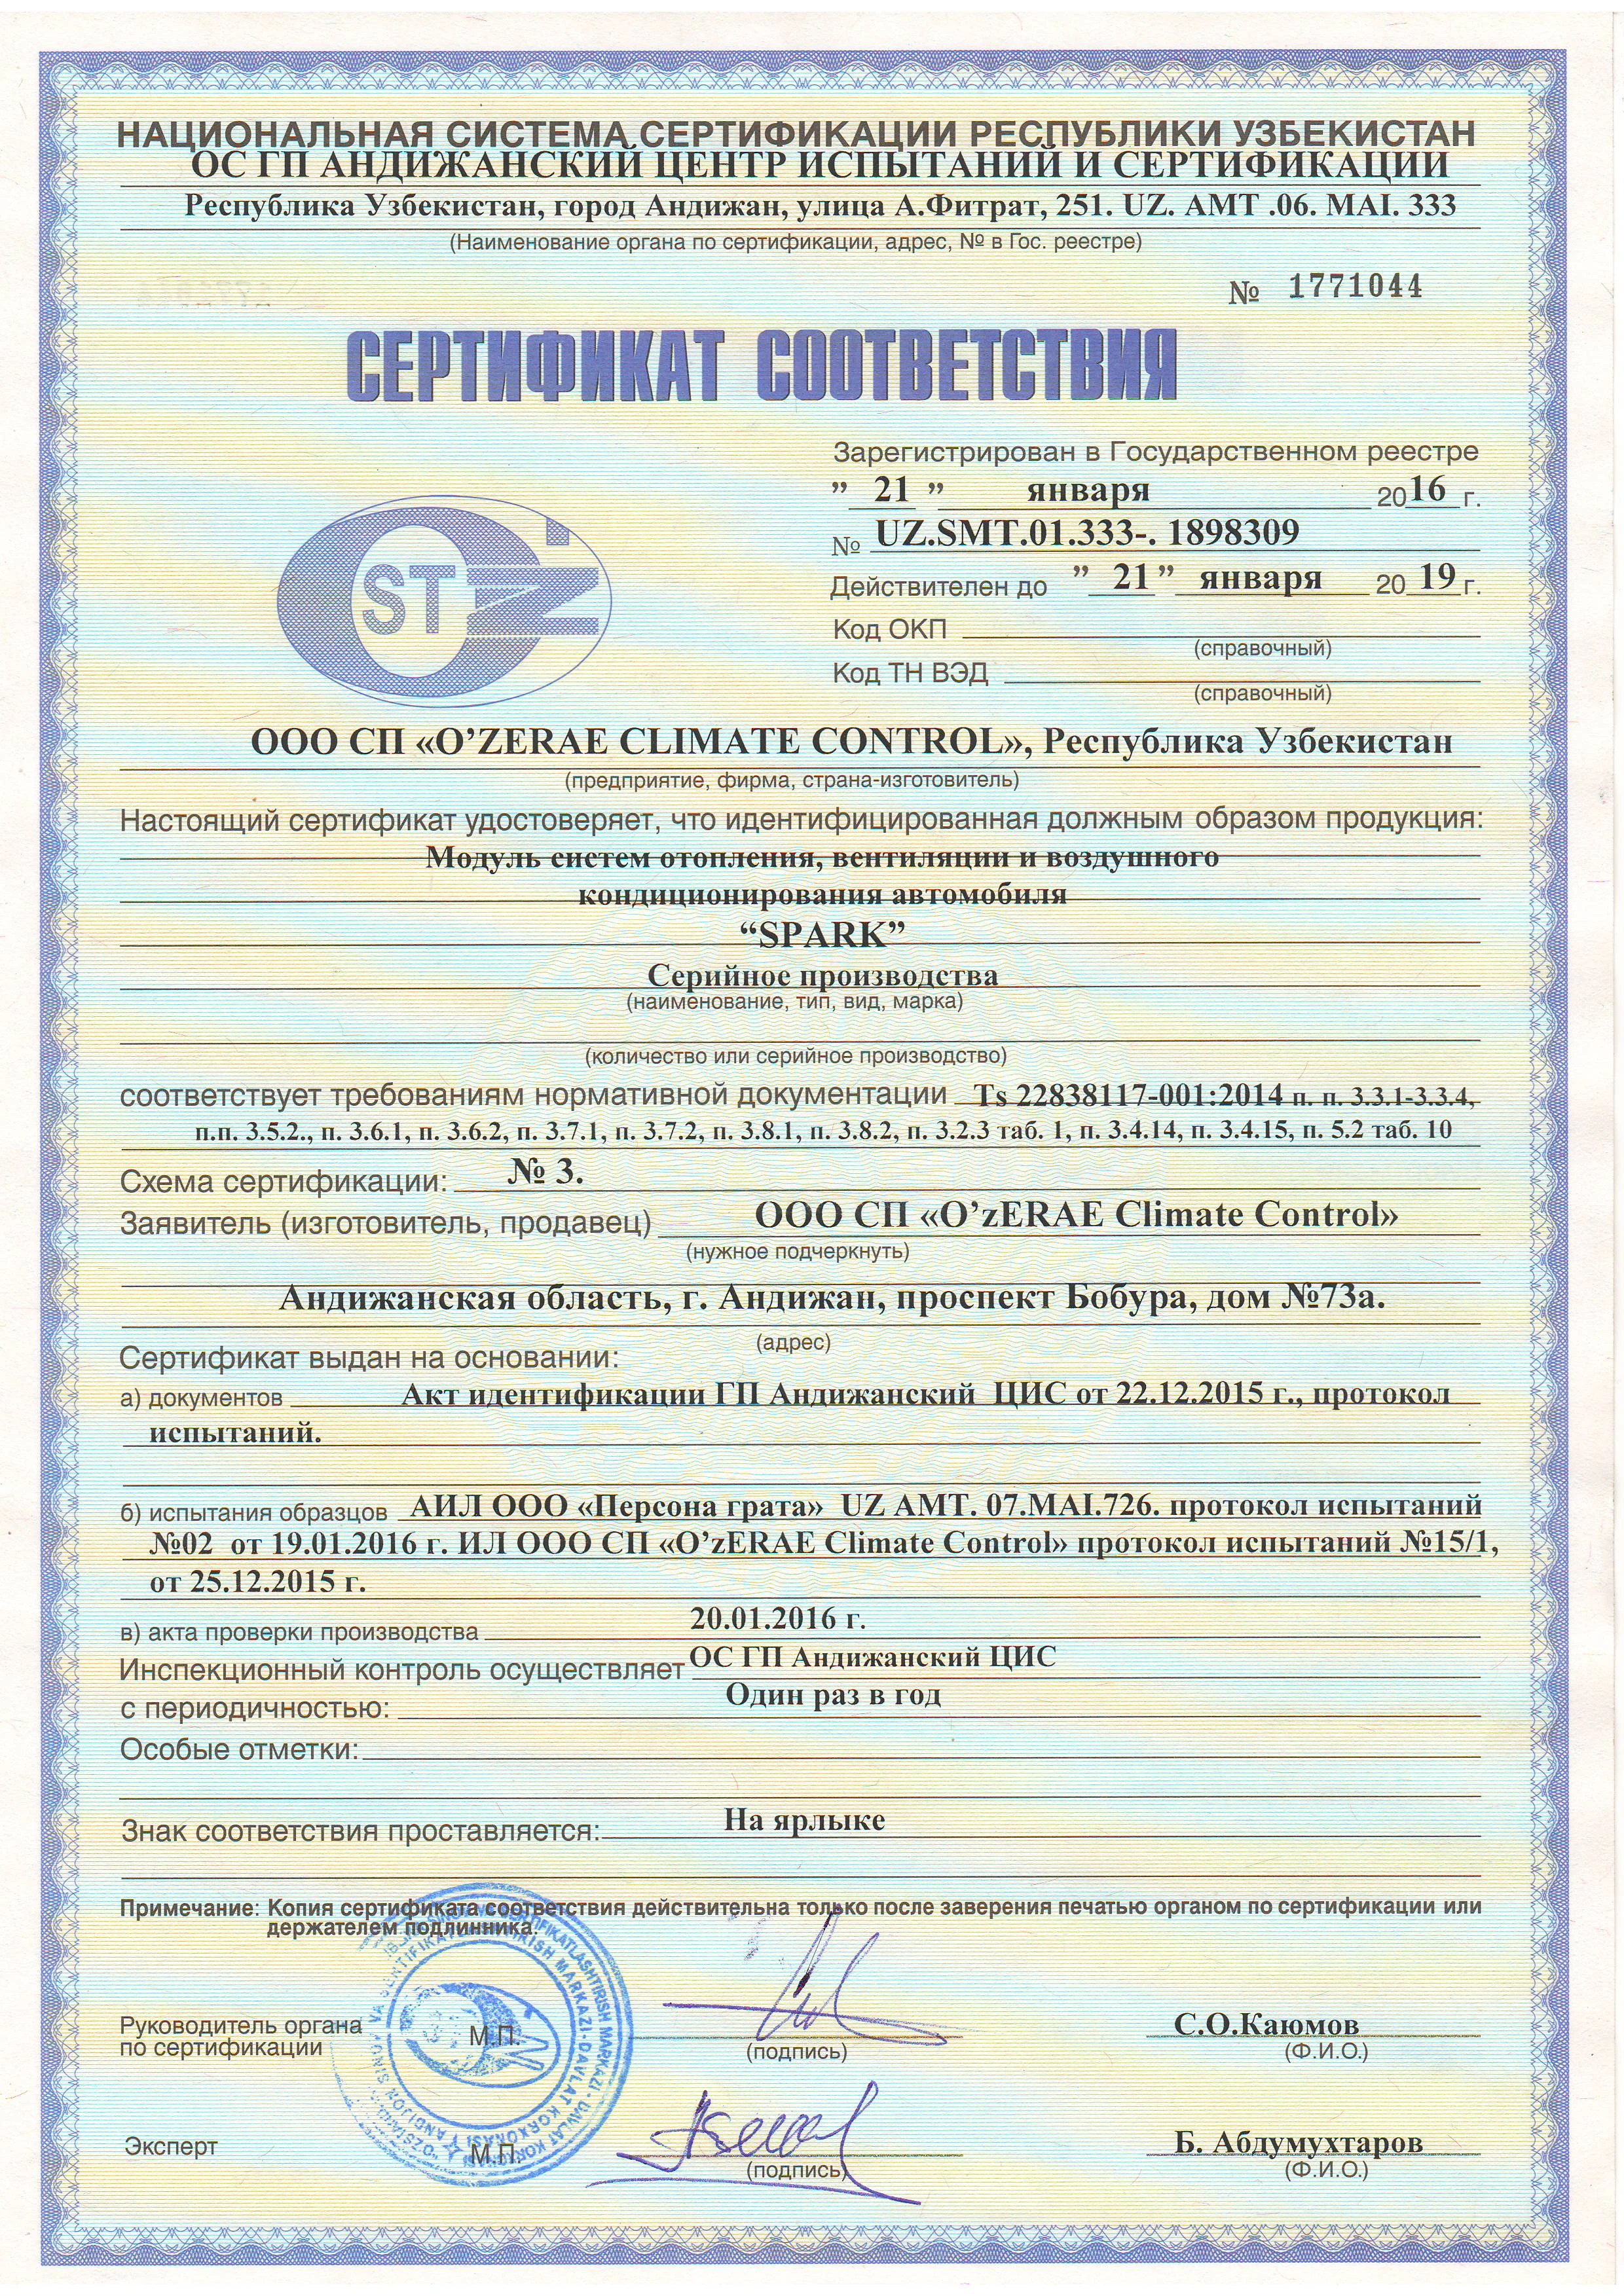 Certification_4